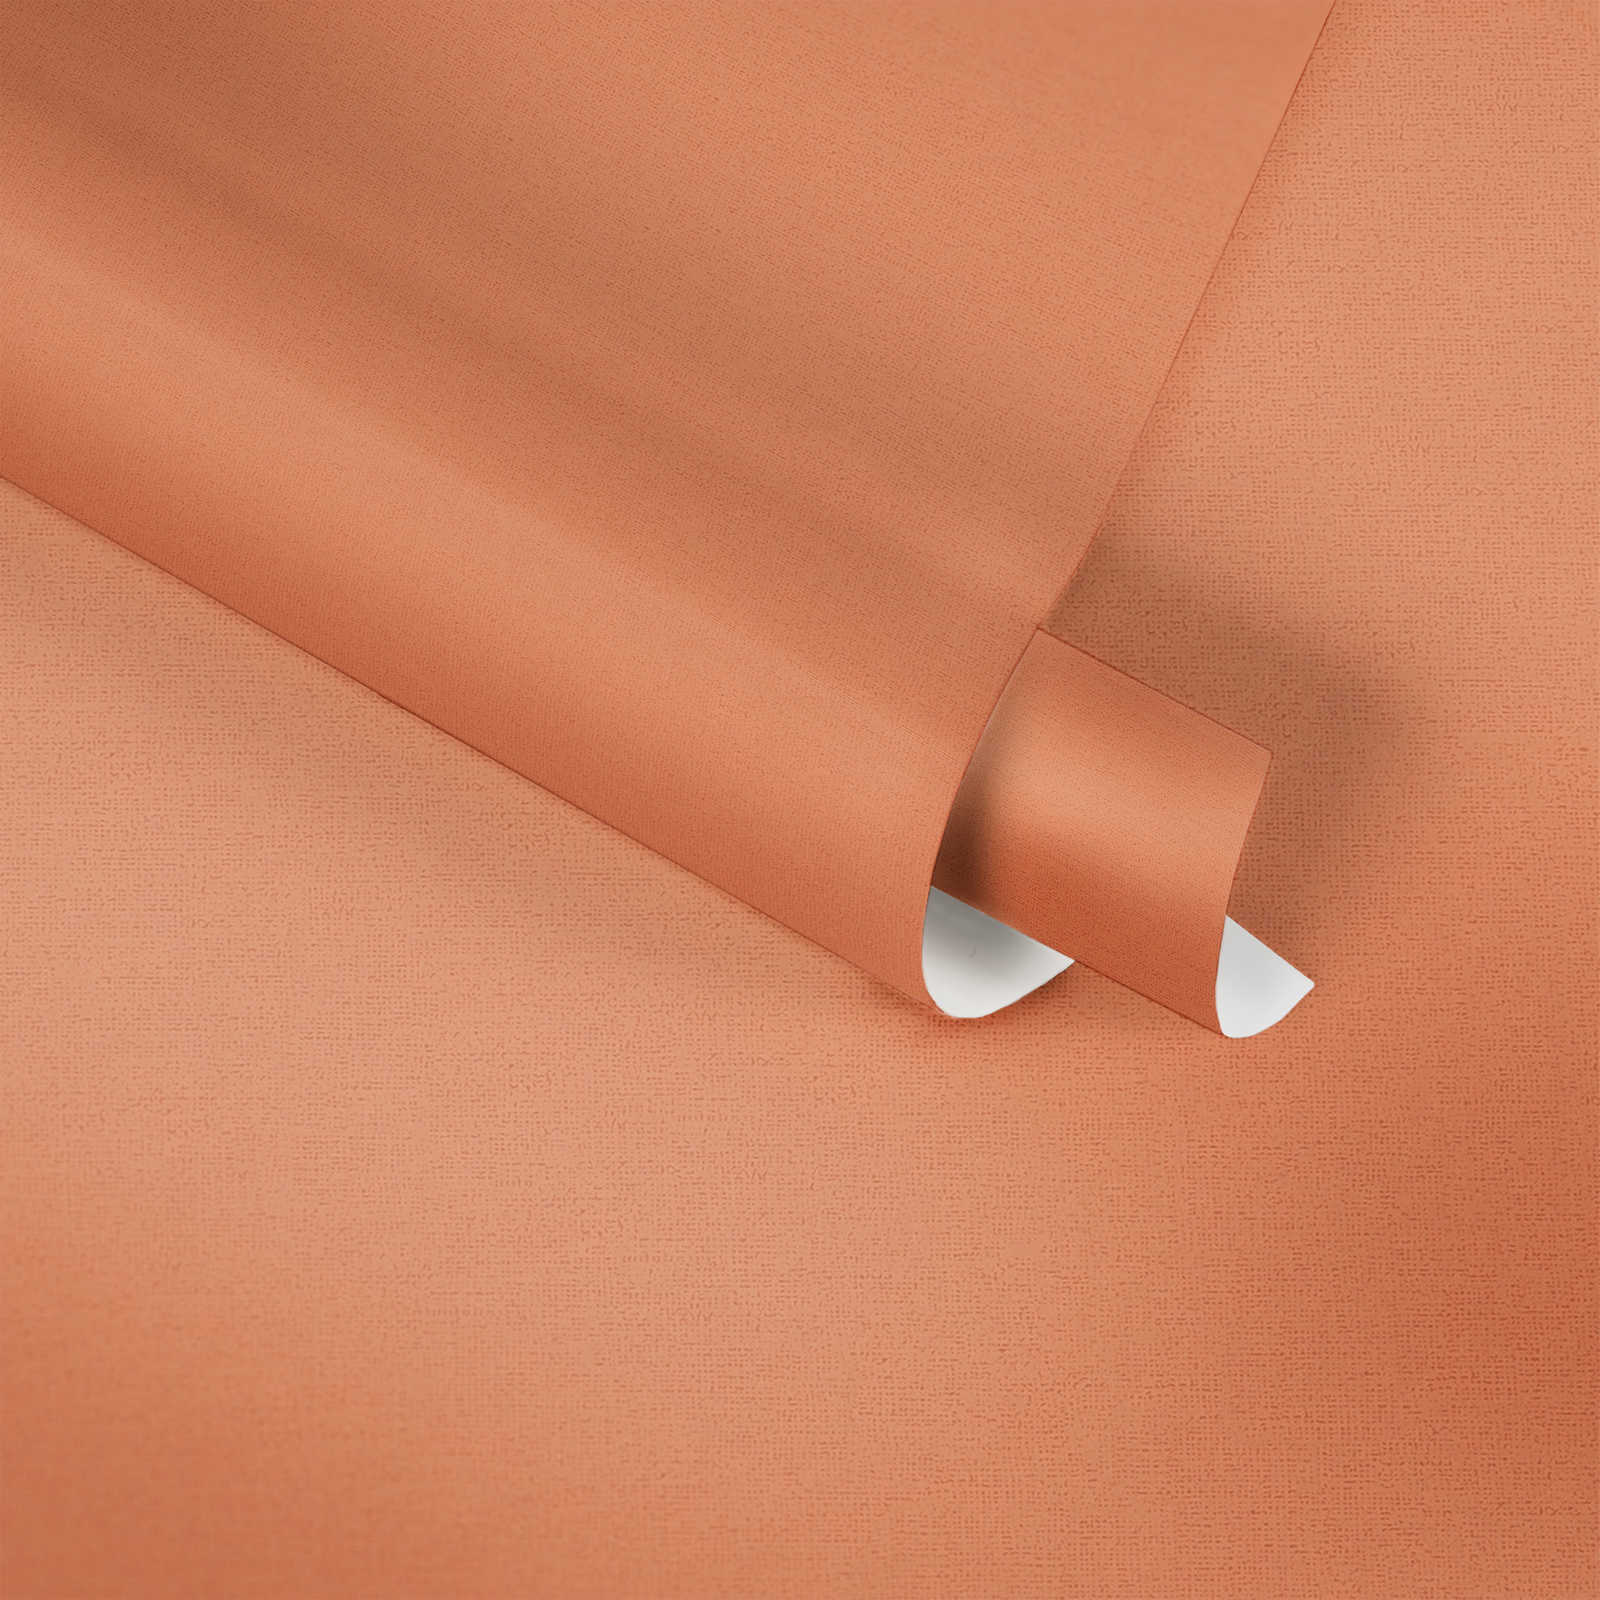             Plain wallpaper orange, plain & matte from MICHALSKY
        